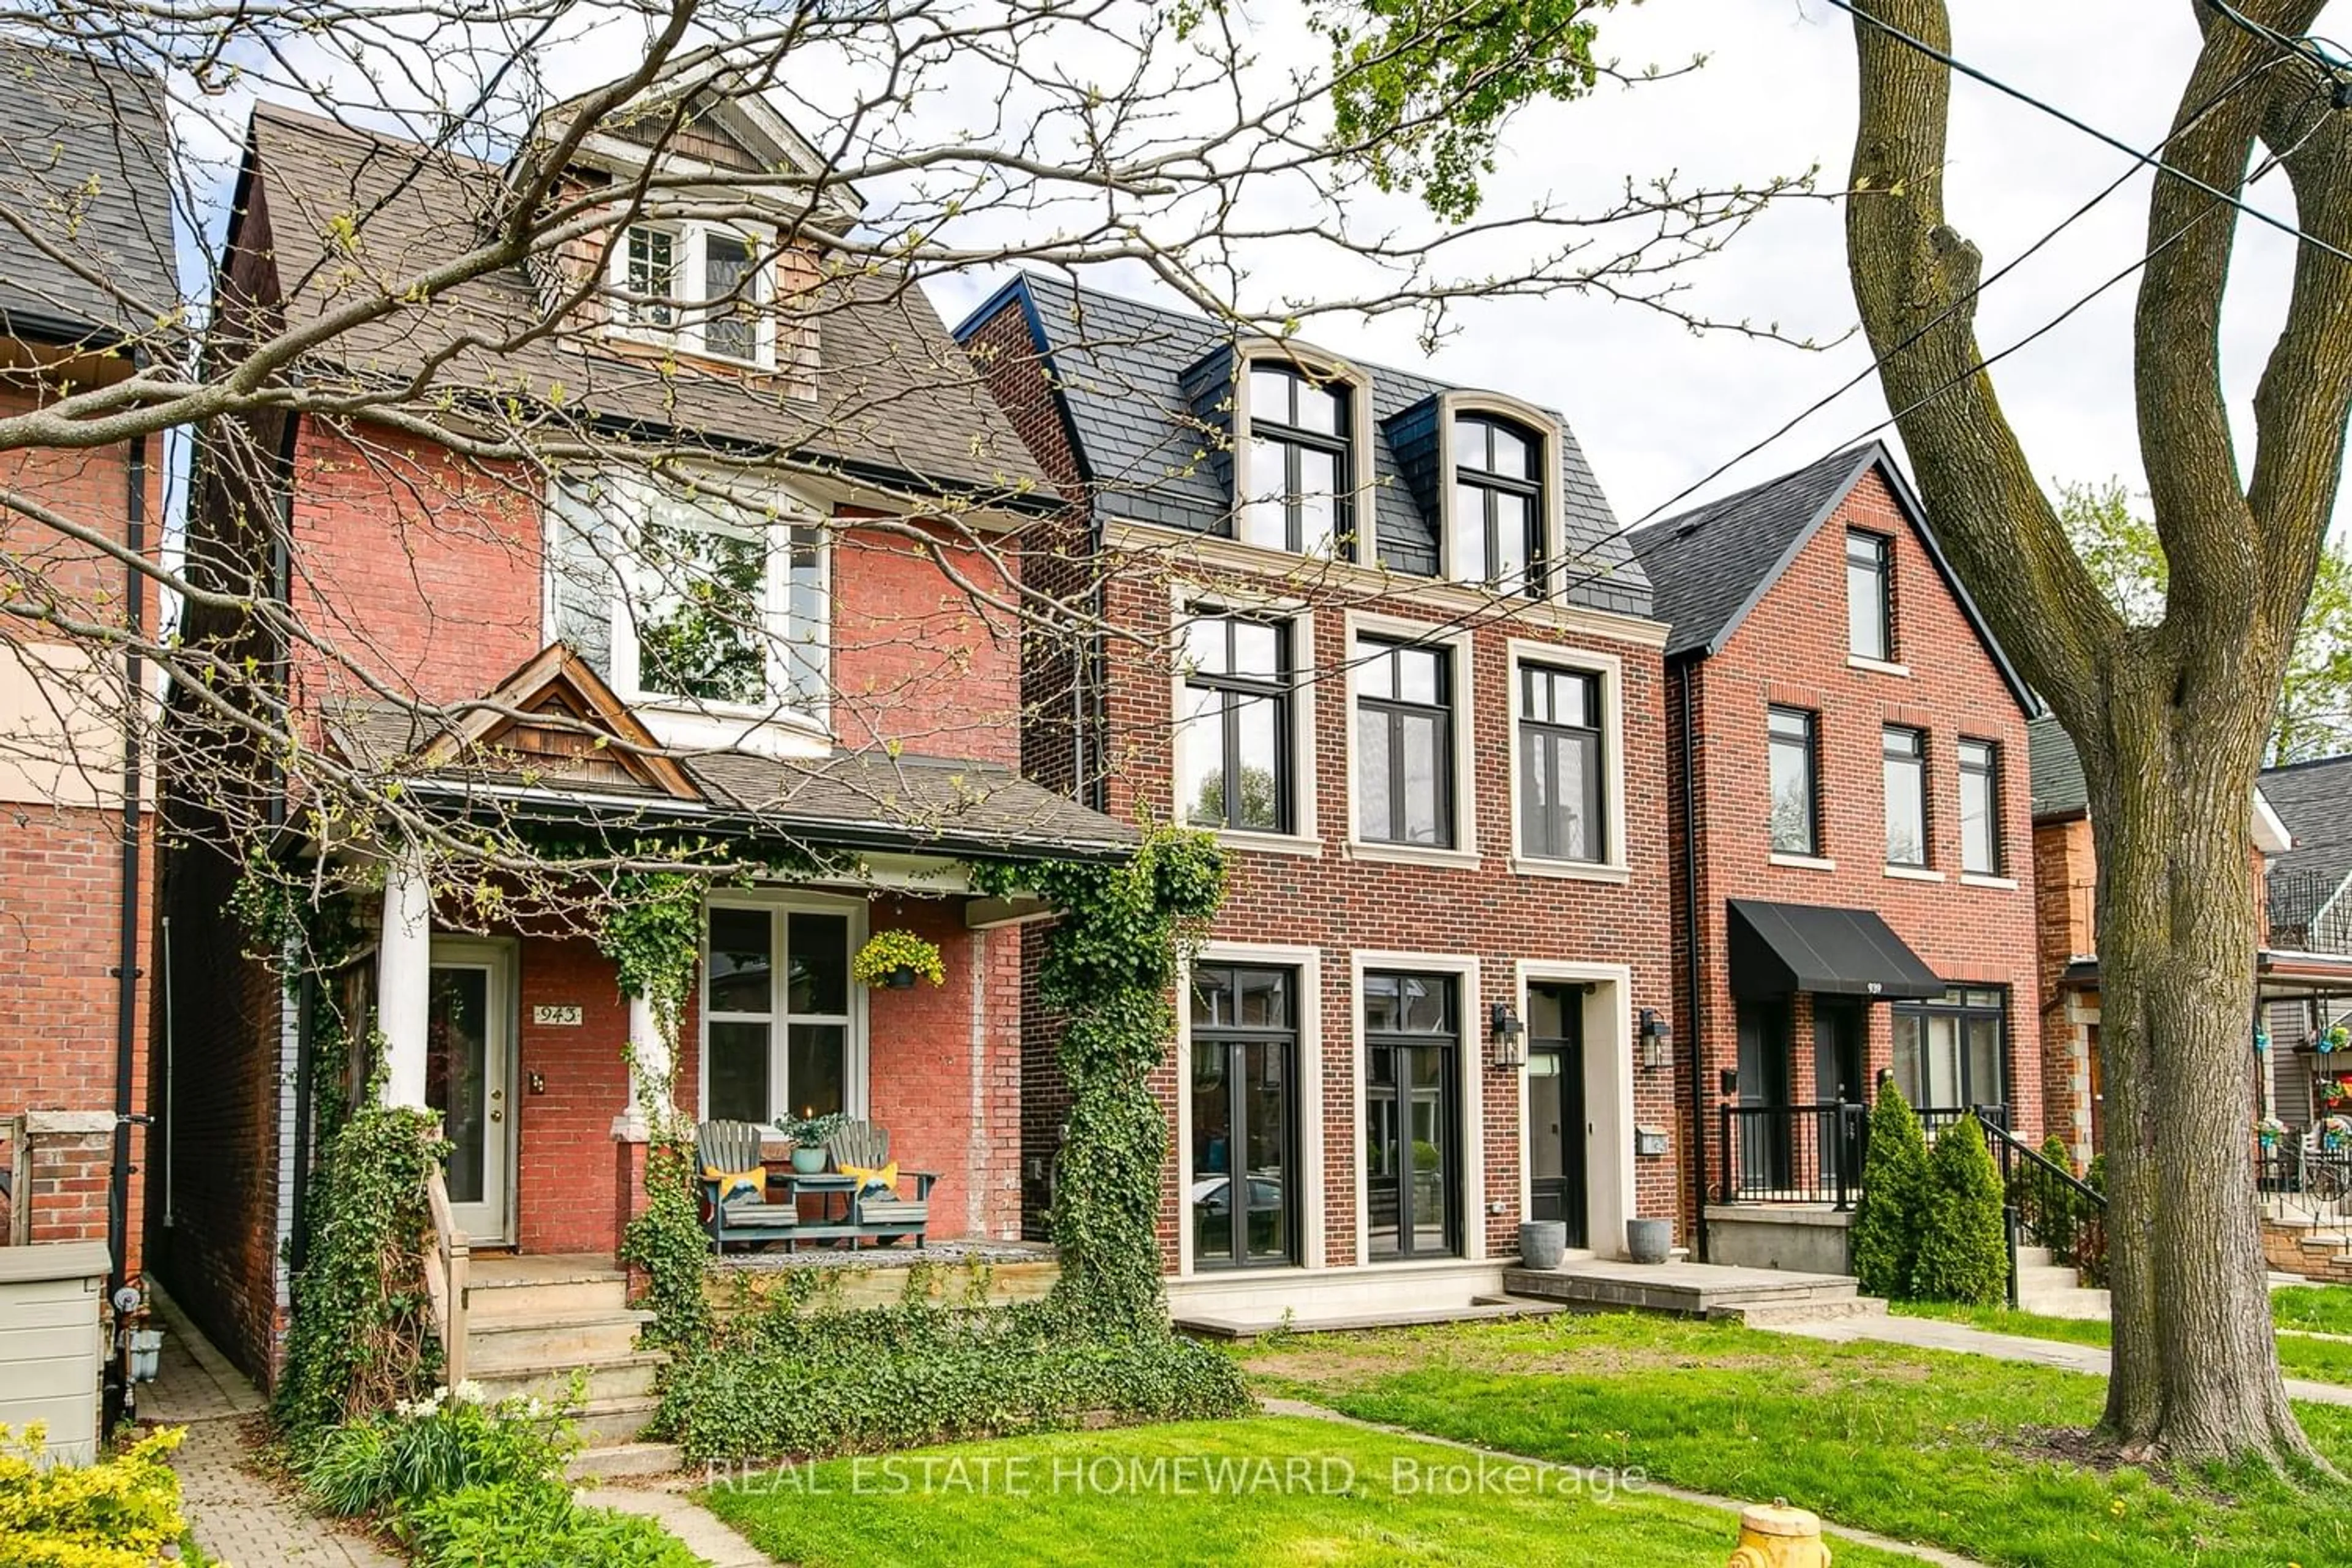 Home with brick exterior material for 943 Logan Ave, Toronto Ontario M4K 3E3